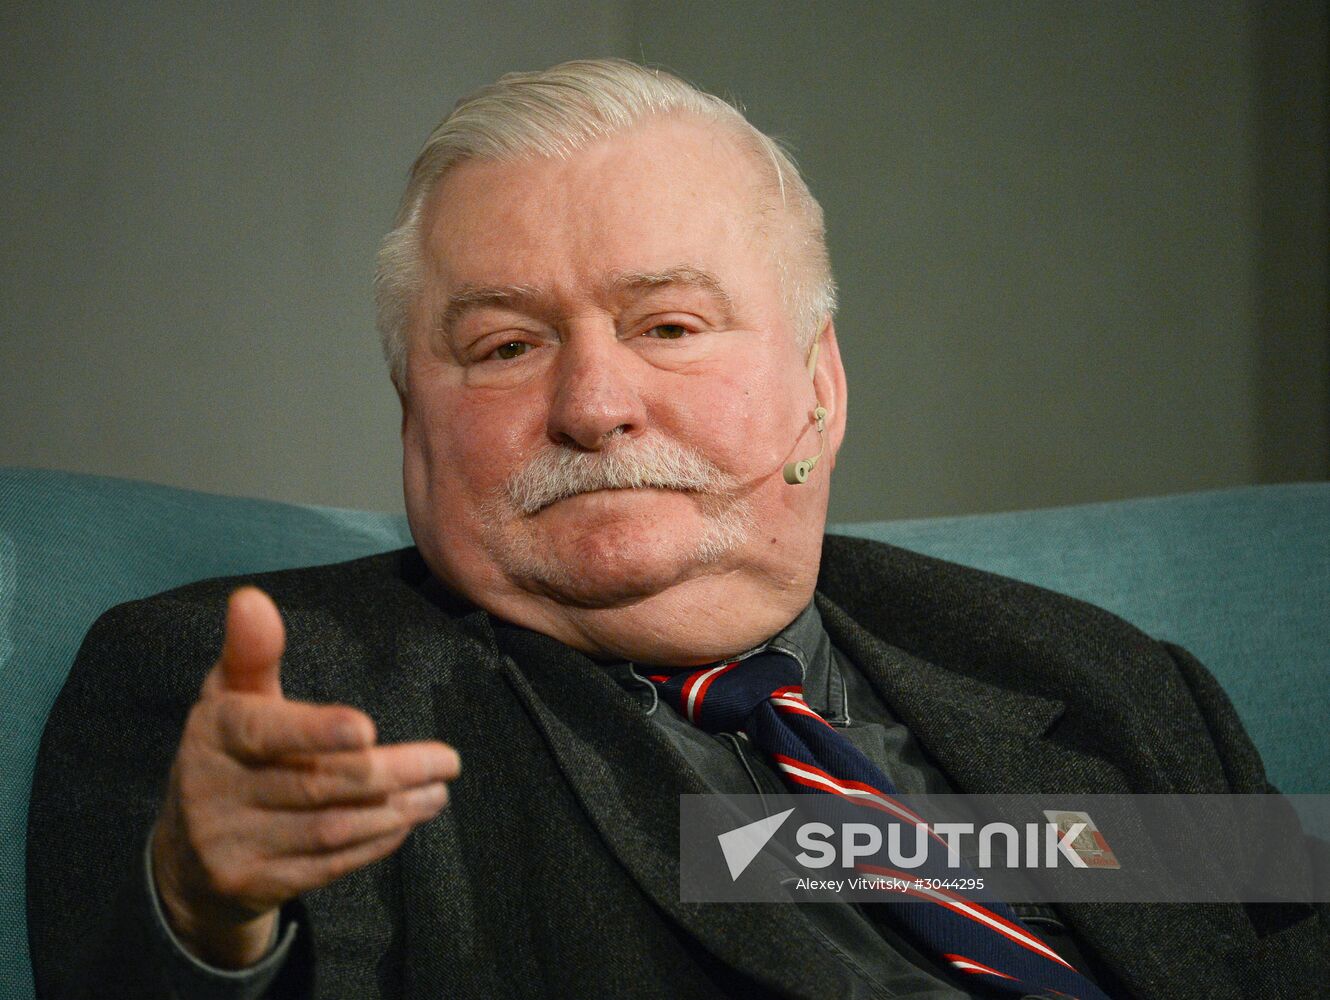 Former President of Poland Lech Wałęsa